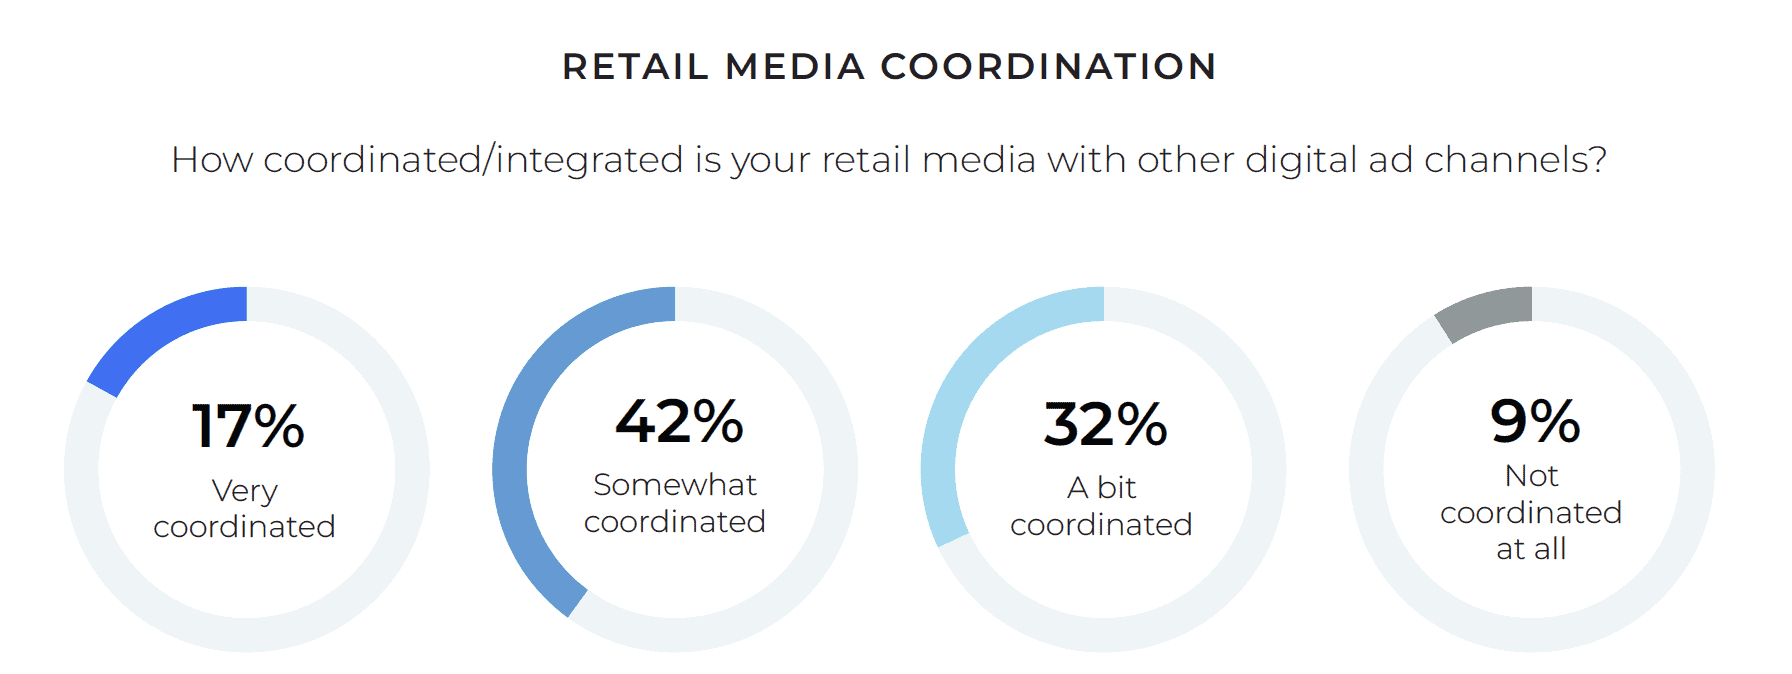 Retail Media Coordination - integrated retail media